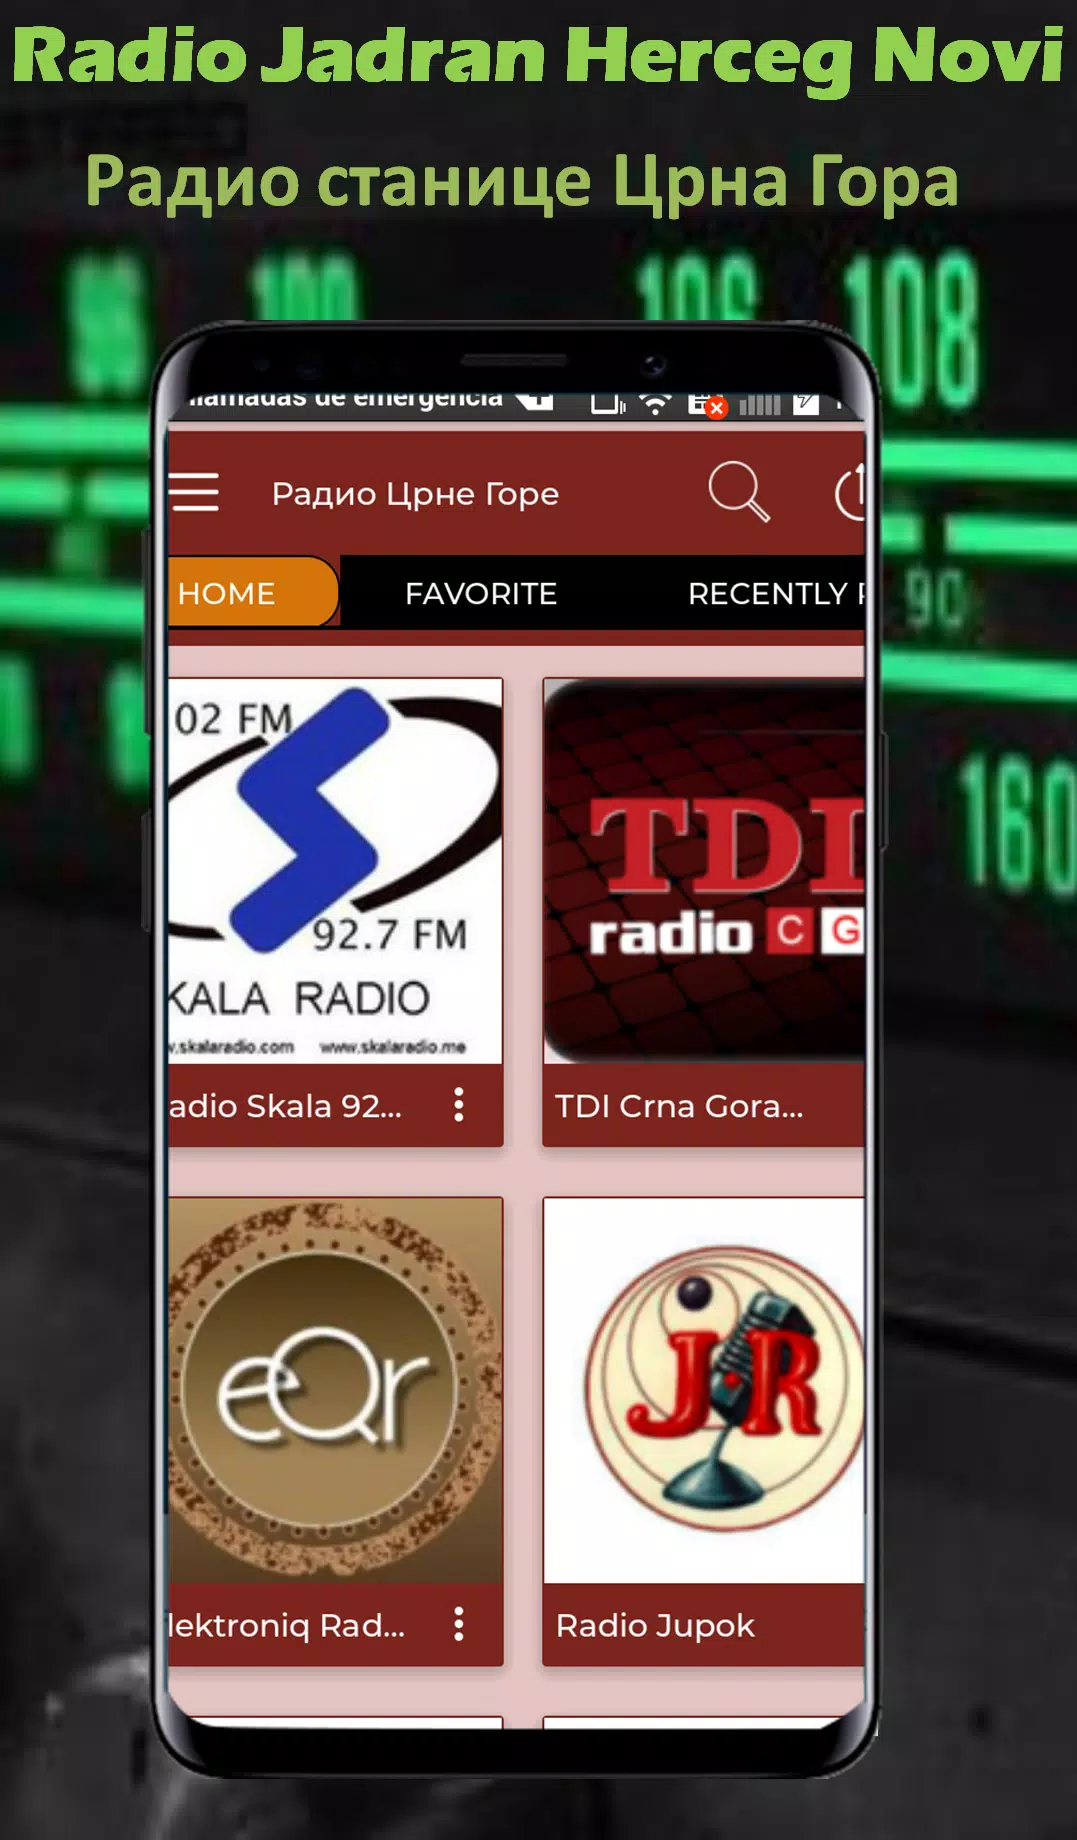 Radio Jadran for Android - APK Download